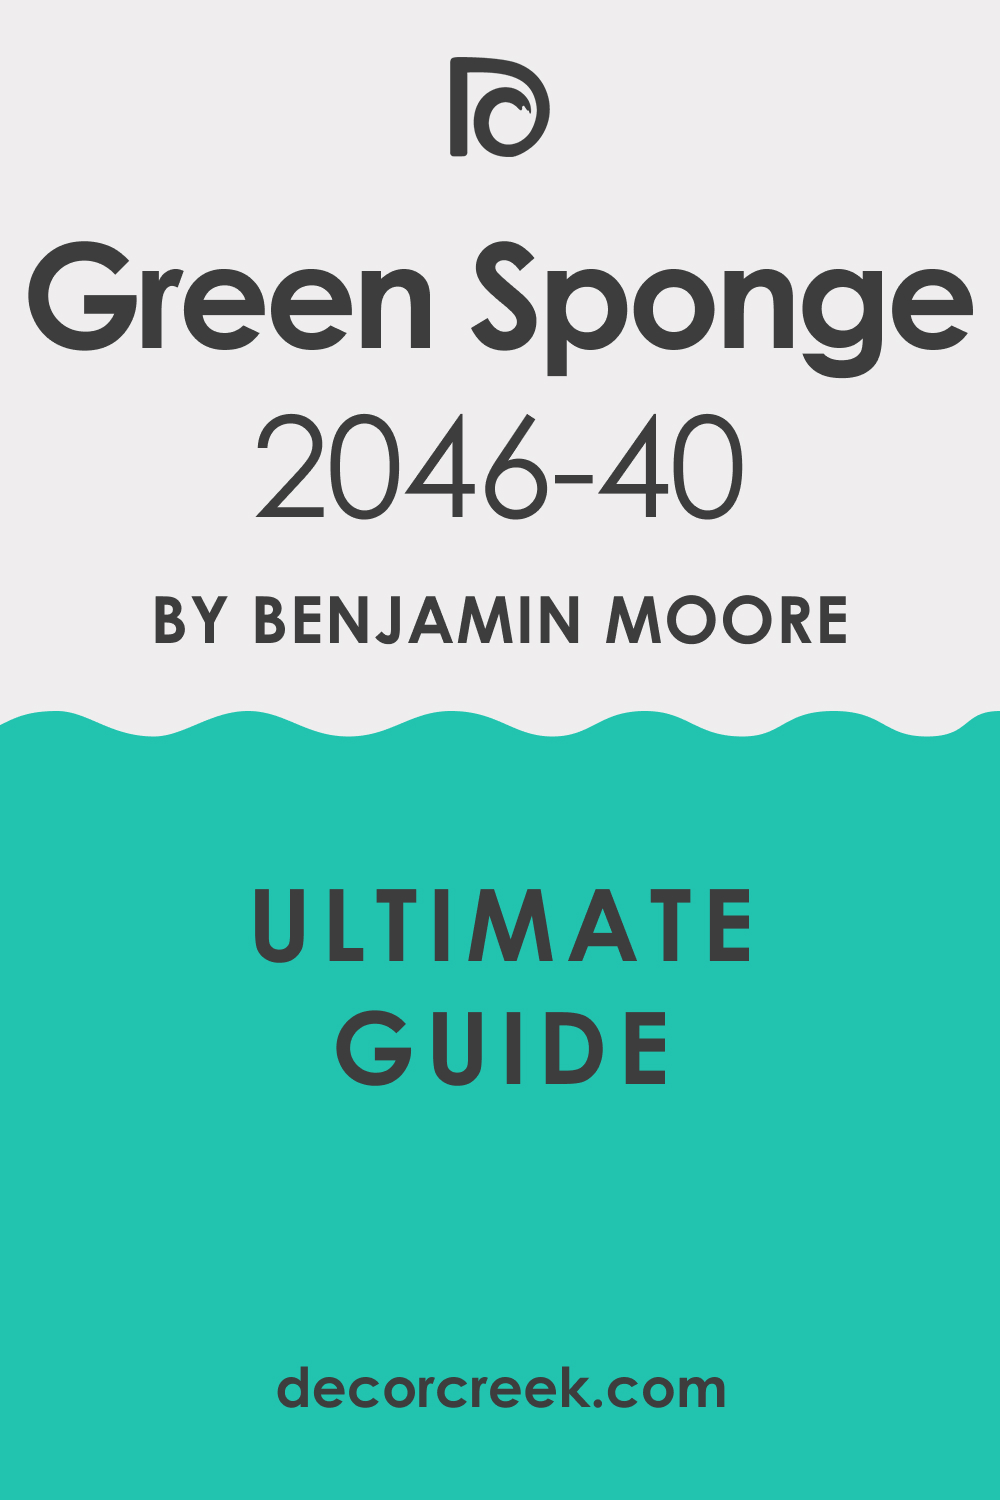 Ultimate Guide of Green Sponge 2046-40 